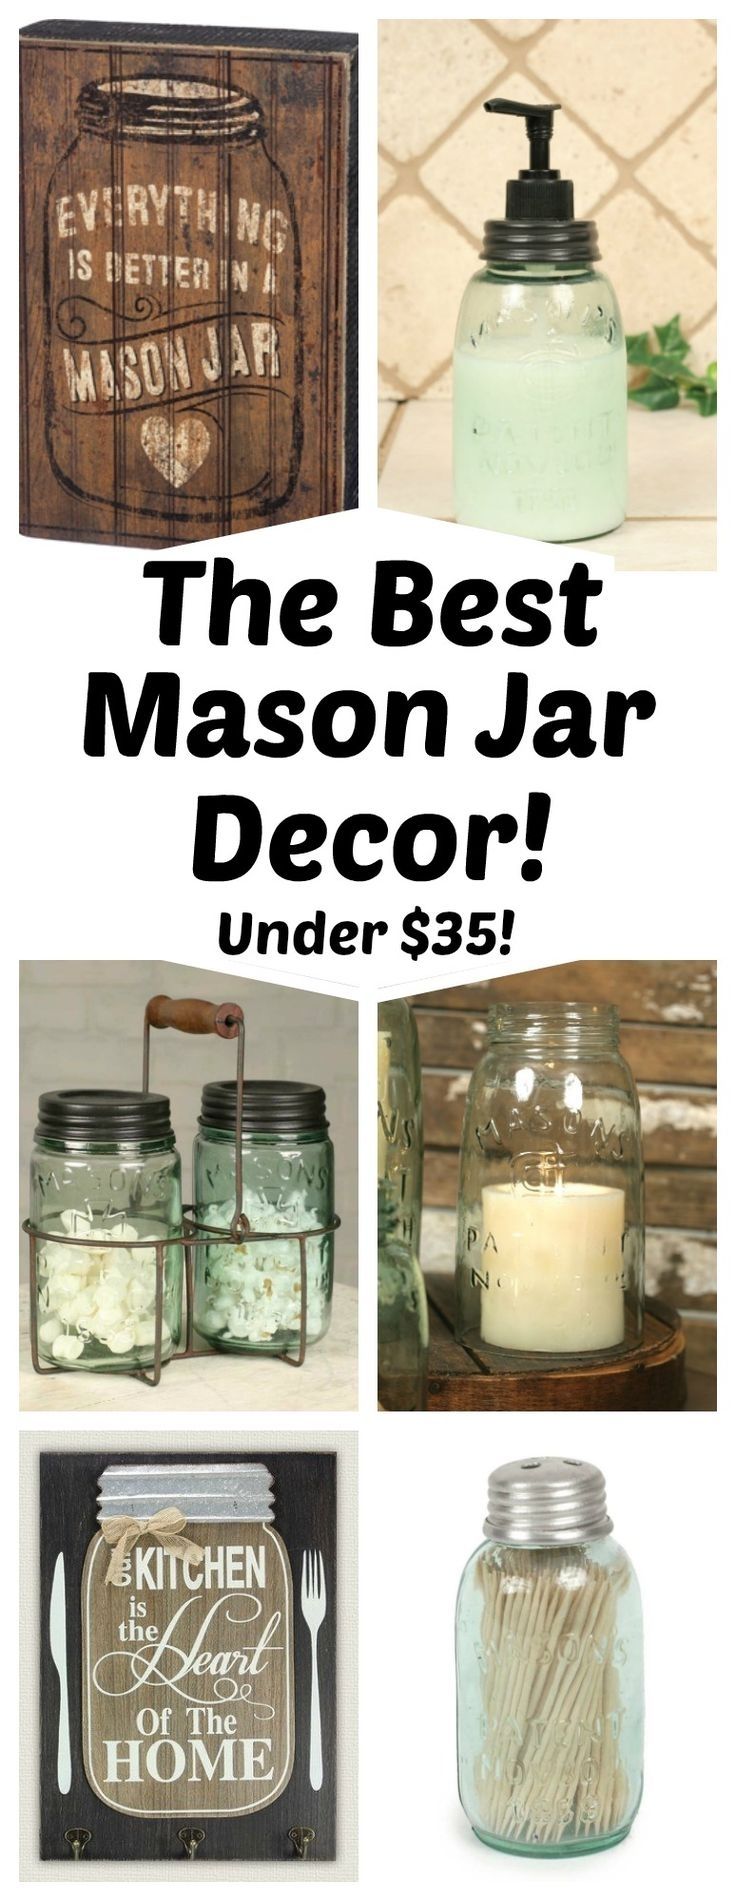 43 Mason Jar Wall Art, Burlap Buttons: Mason Jar Wall Decor Pertaining To Mason Jar Wall Art (View 12 of 20)